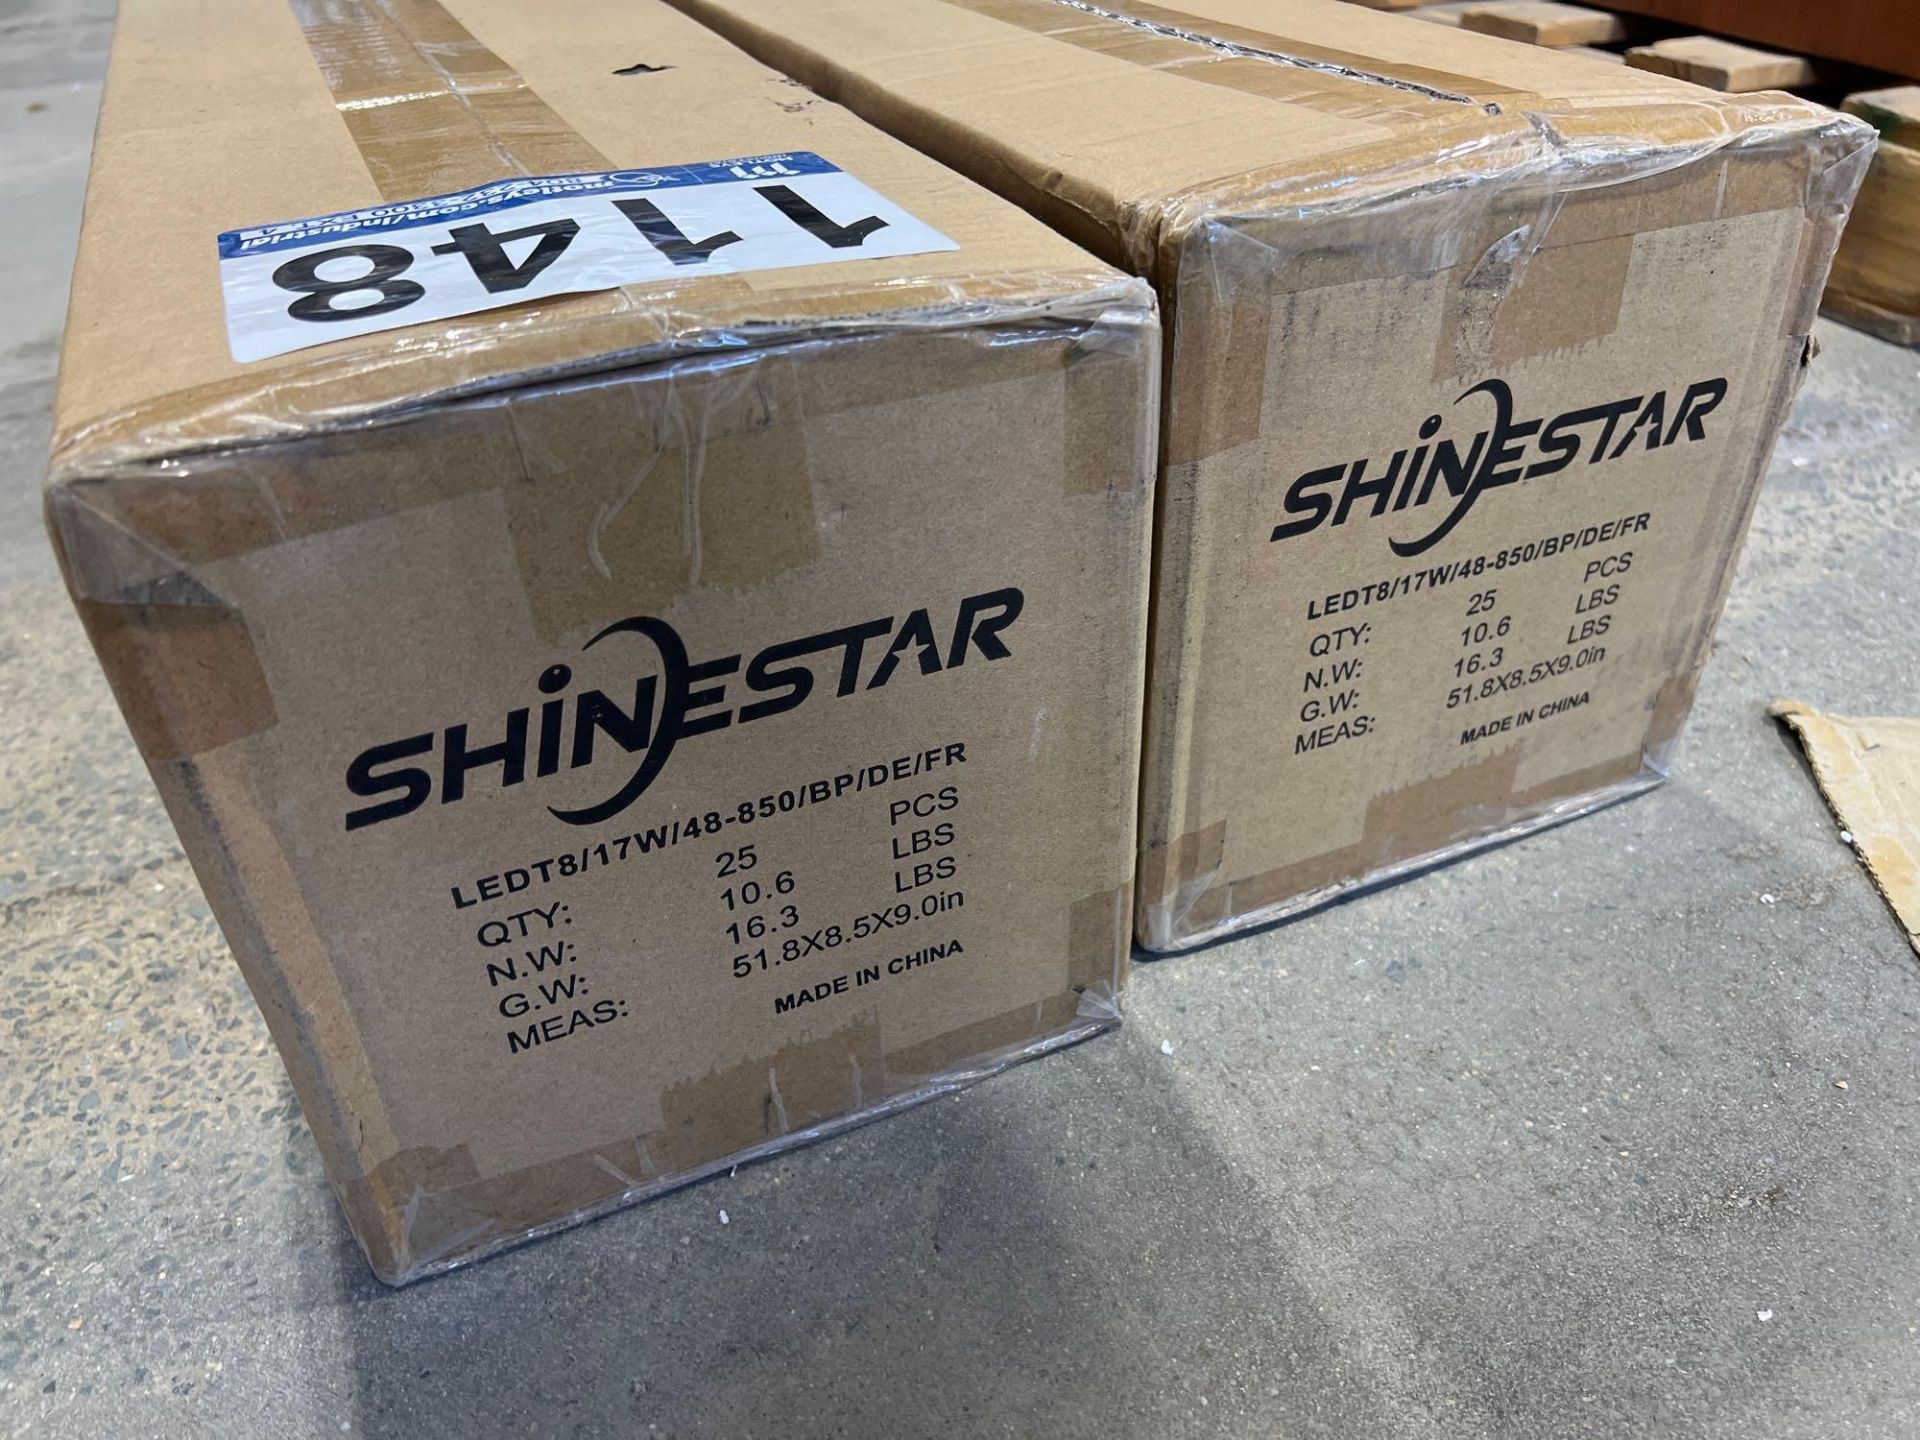 2 Boxes of Shinestar LED Tube Bulbs - Image 4 of 4